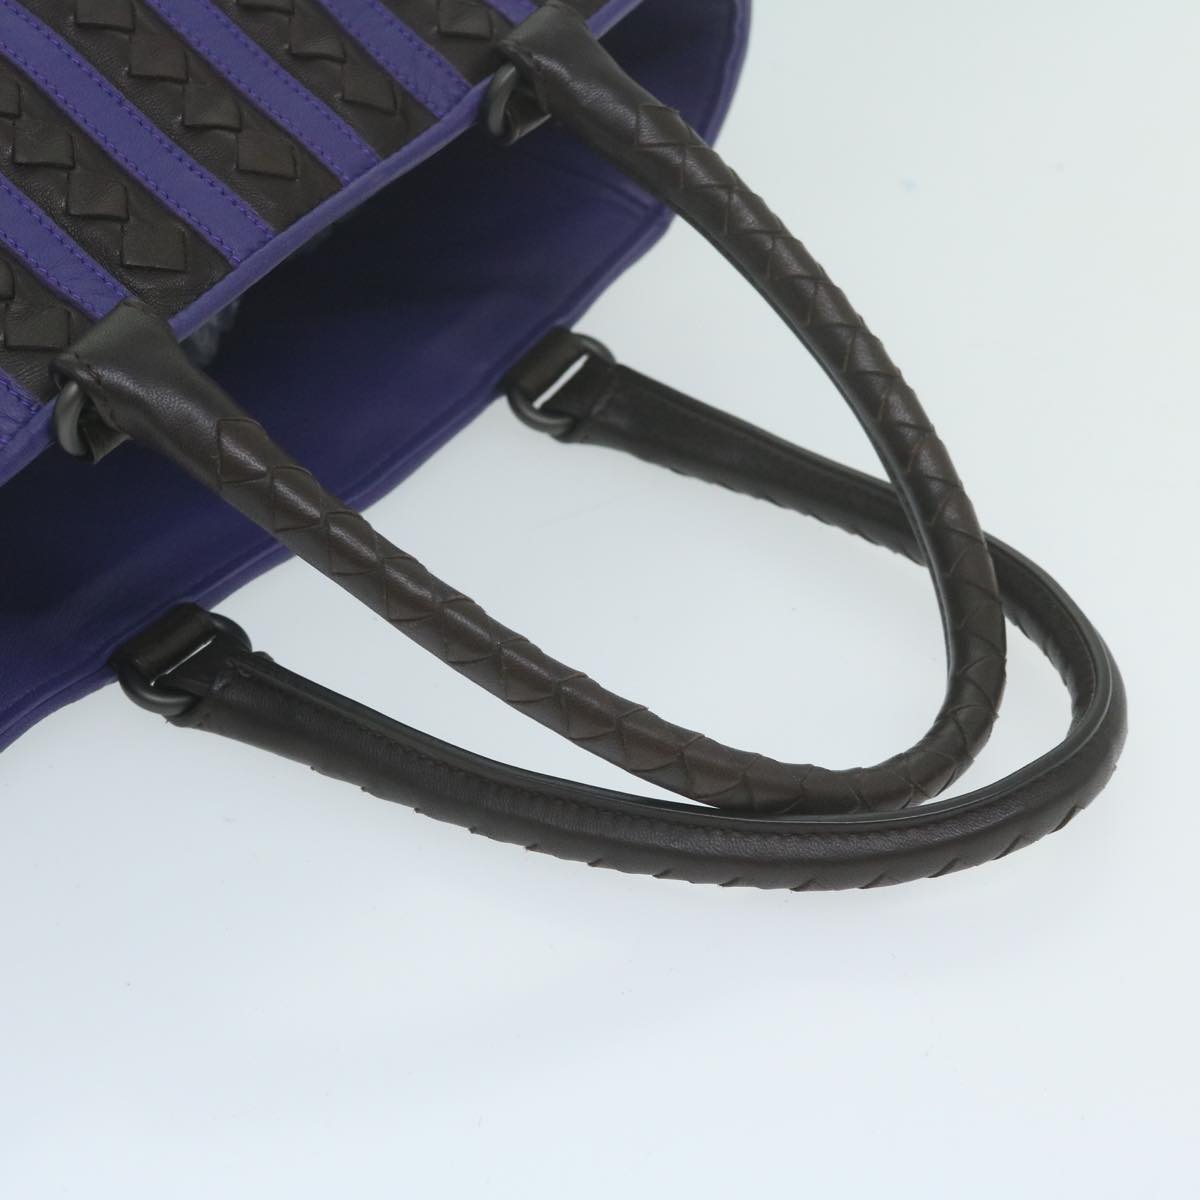 BOTTEGAVENETA INTRECCIATO Tote Bag Leather Purple Auth yk10235